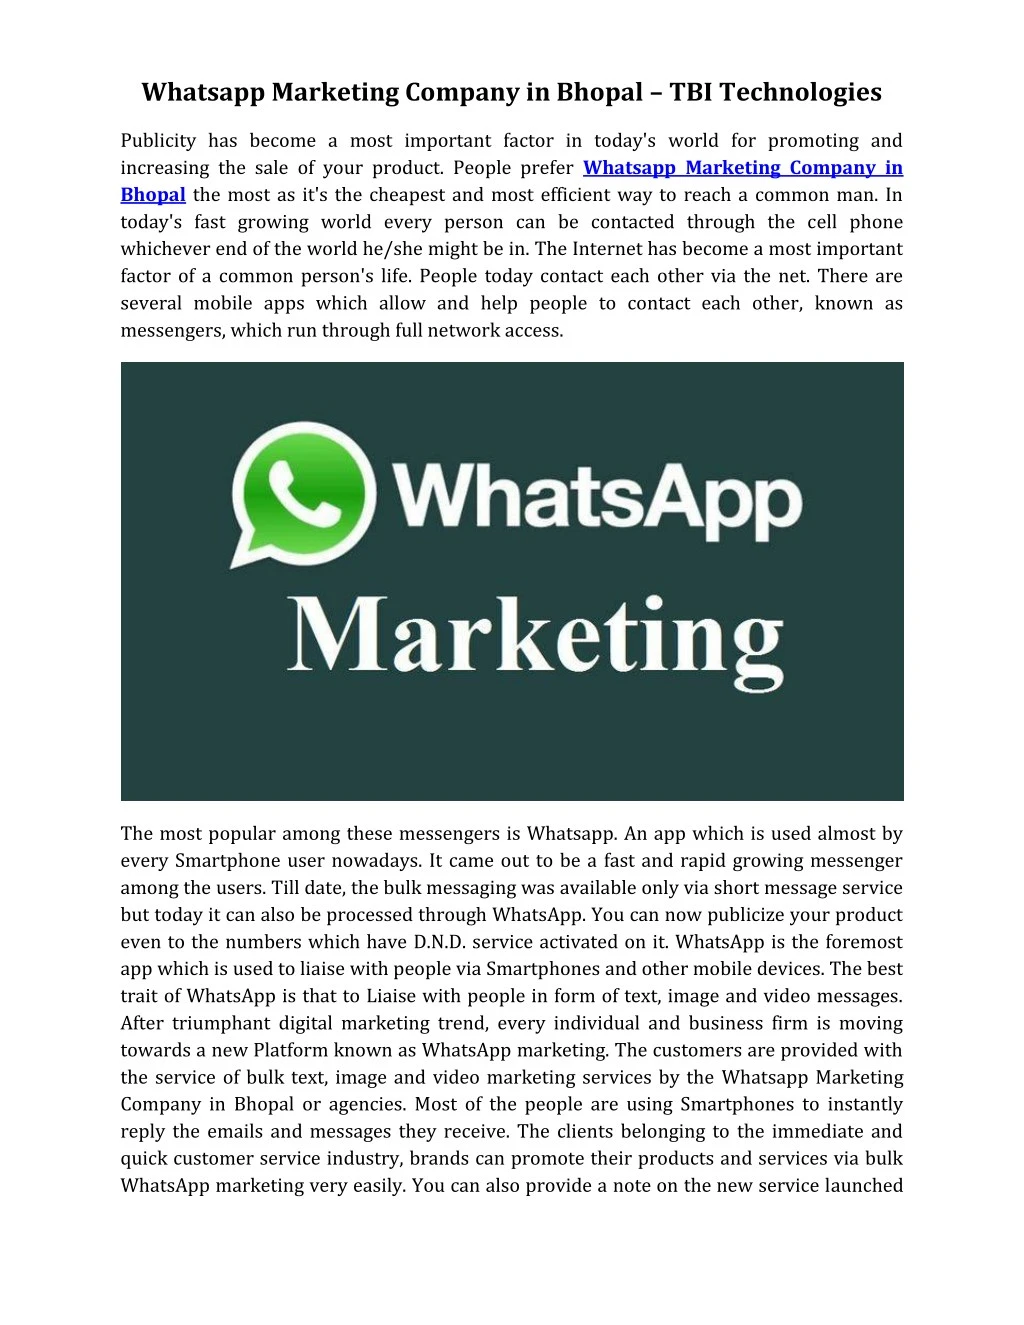 whatsapp marketing company in bhopal